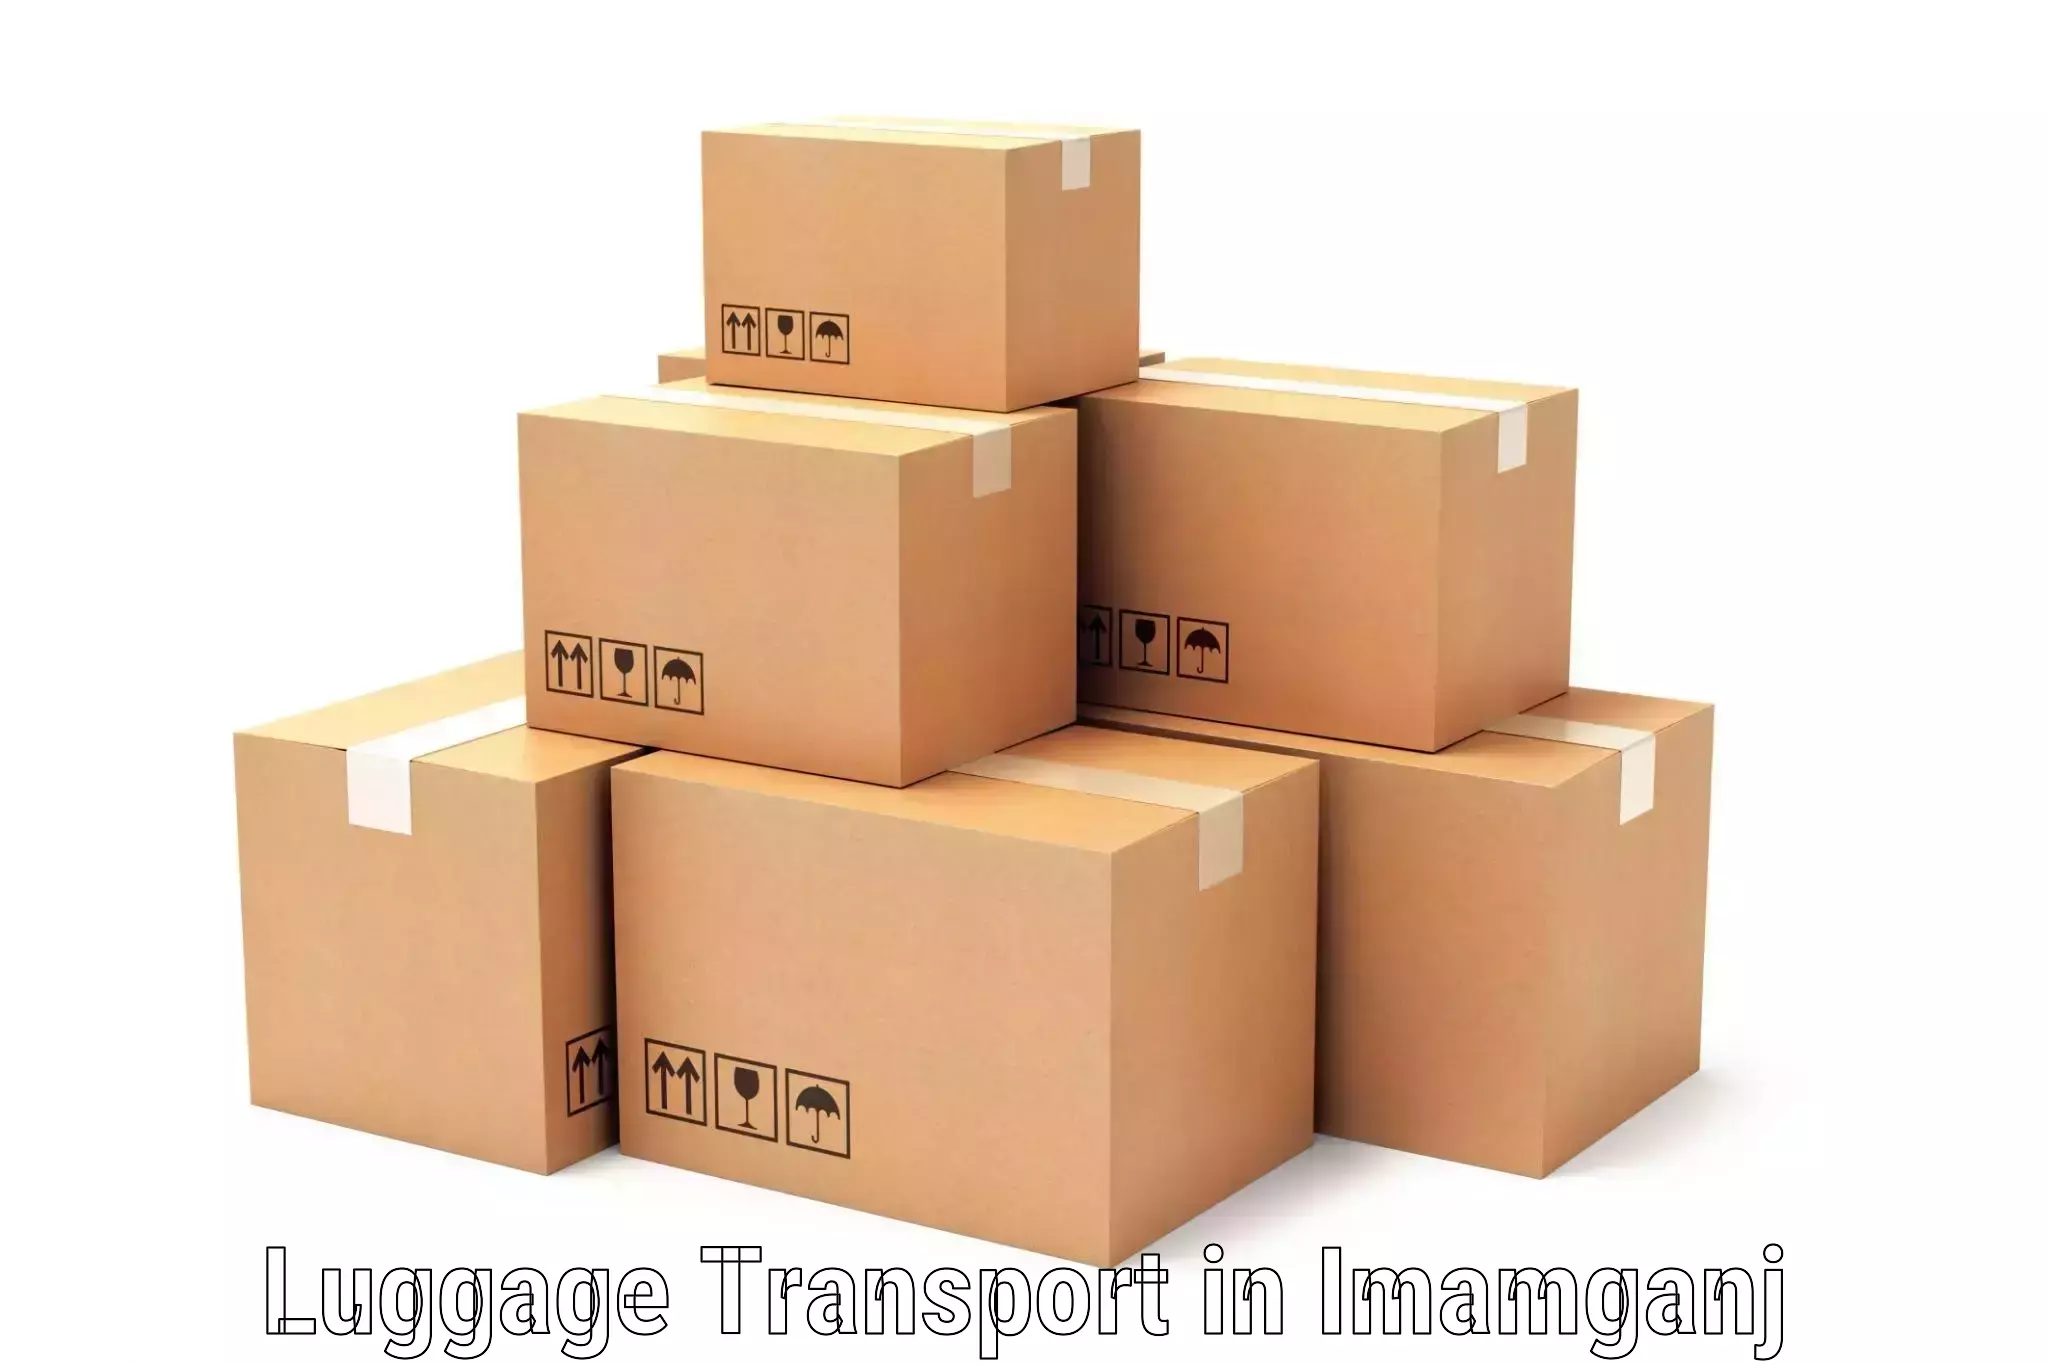 Multi-destination luggage transport in Imamganj